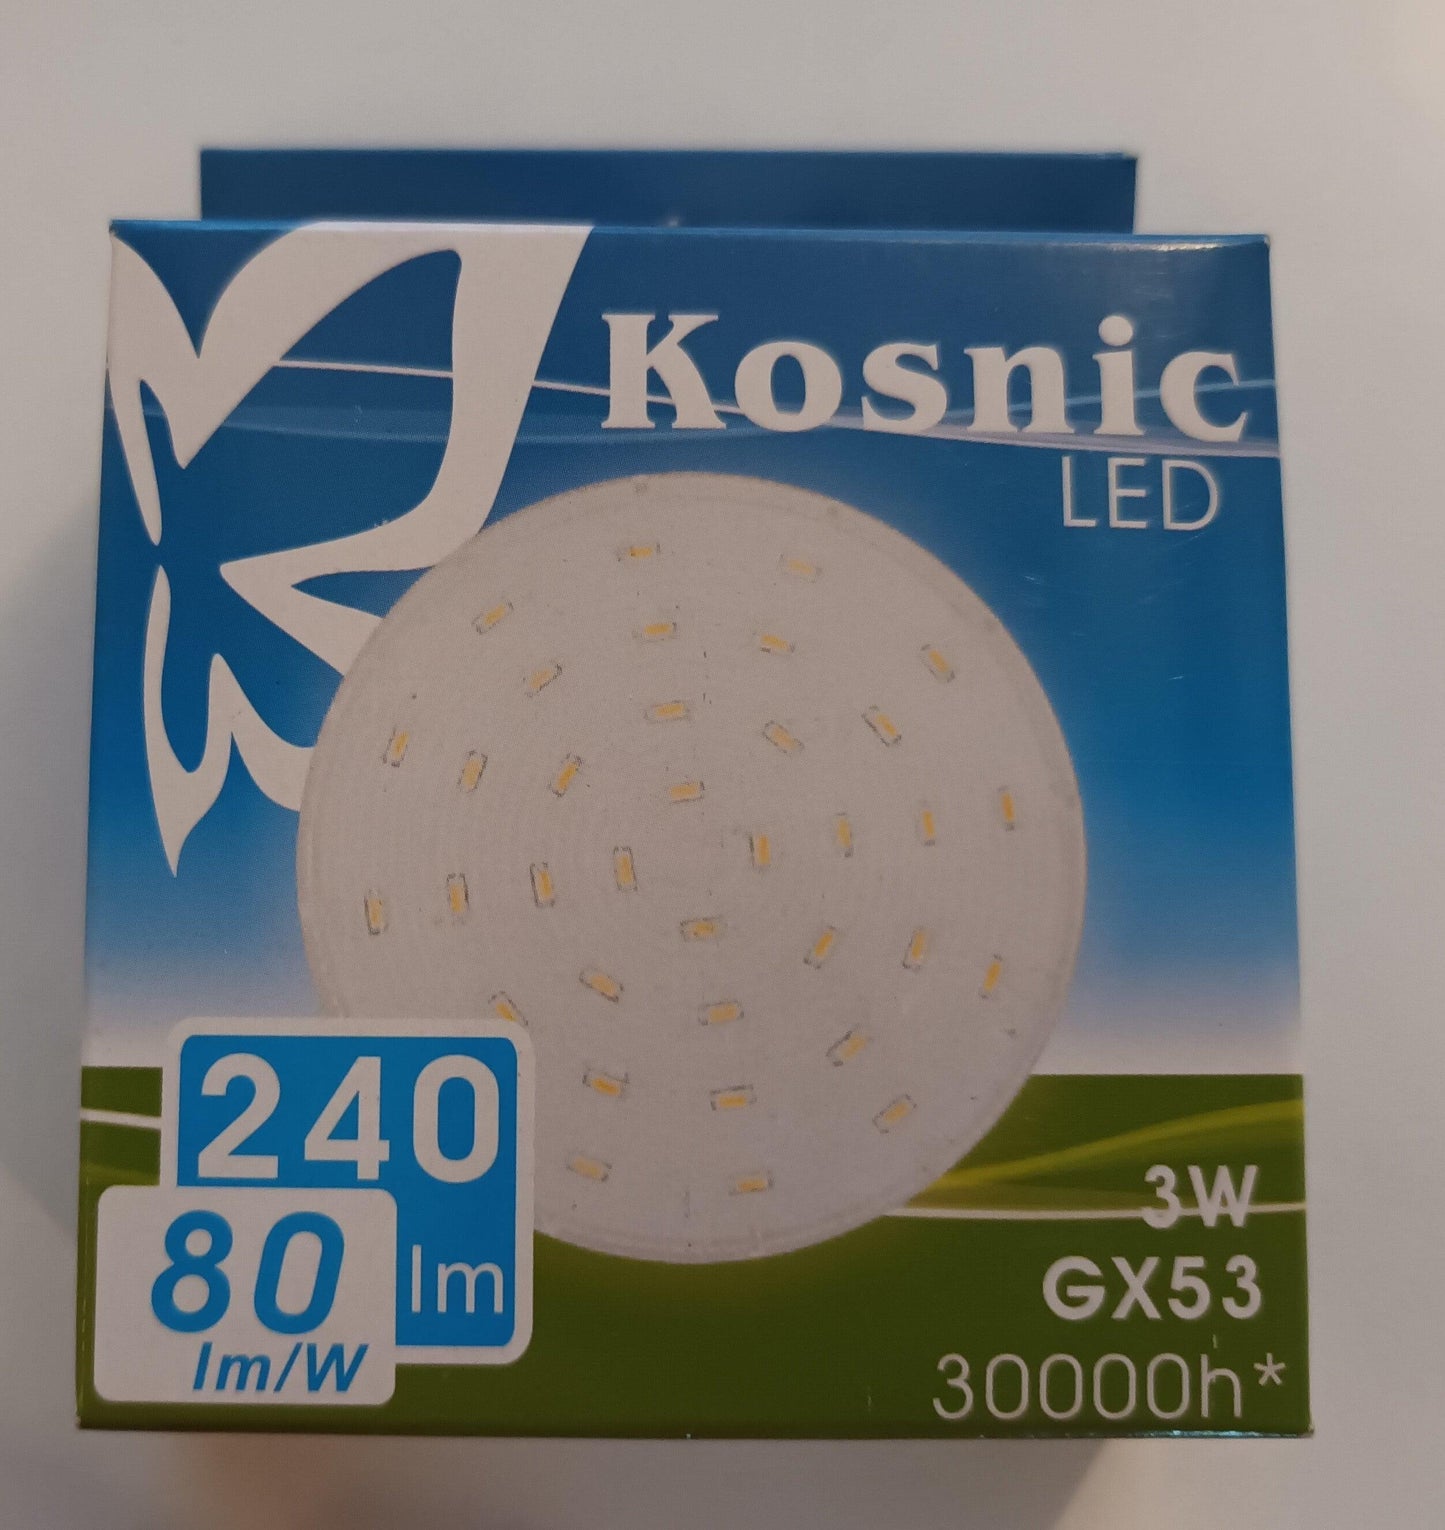 GX53 LED 3W Warm White by Kosnic - Beachcomber Lighting